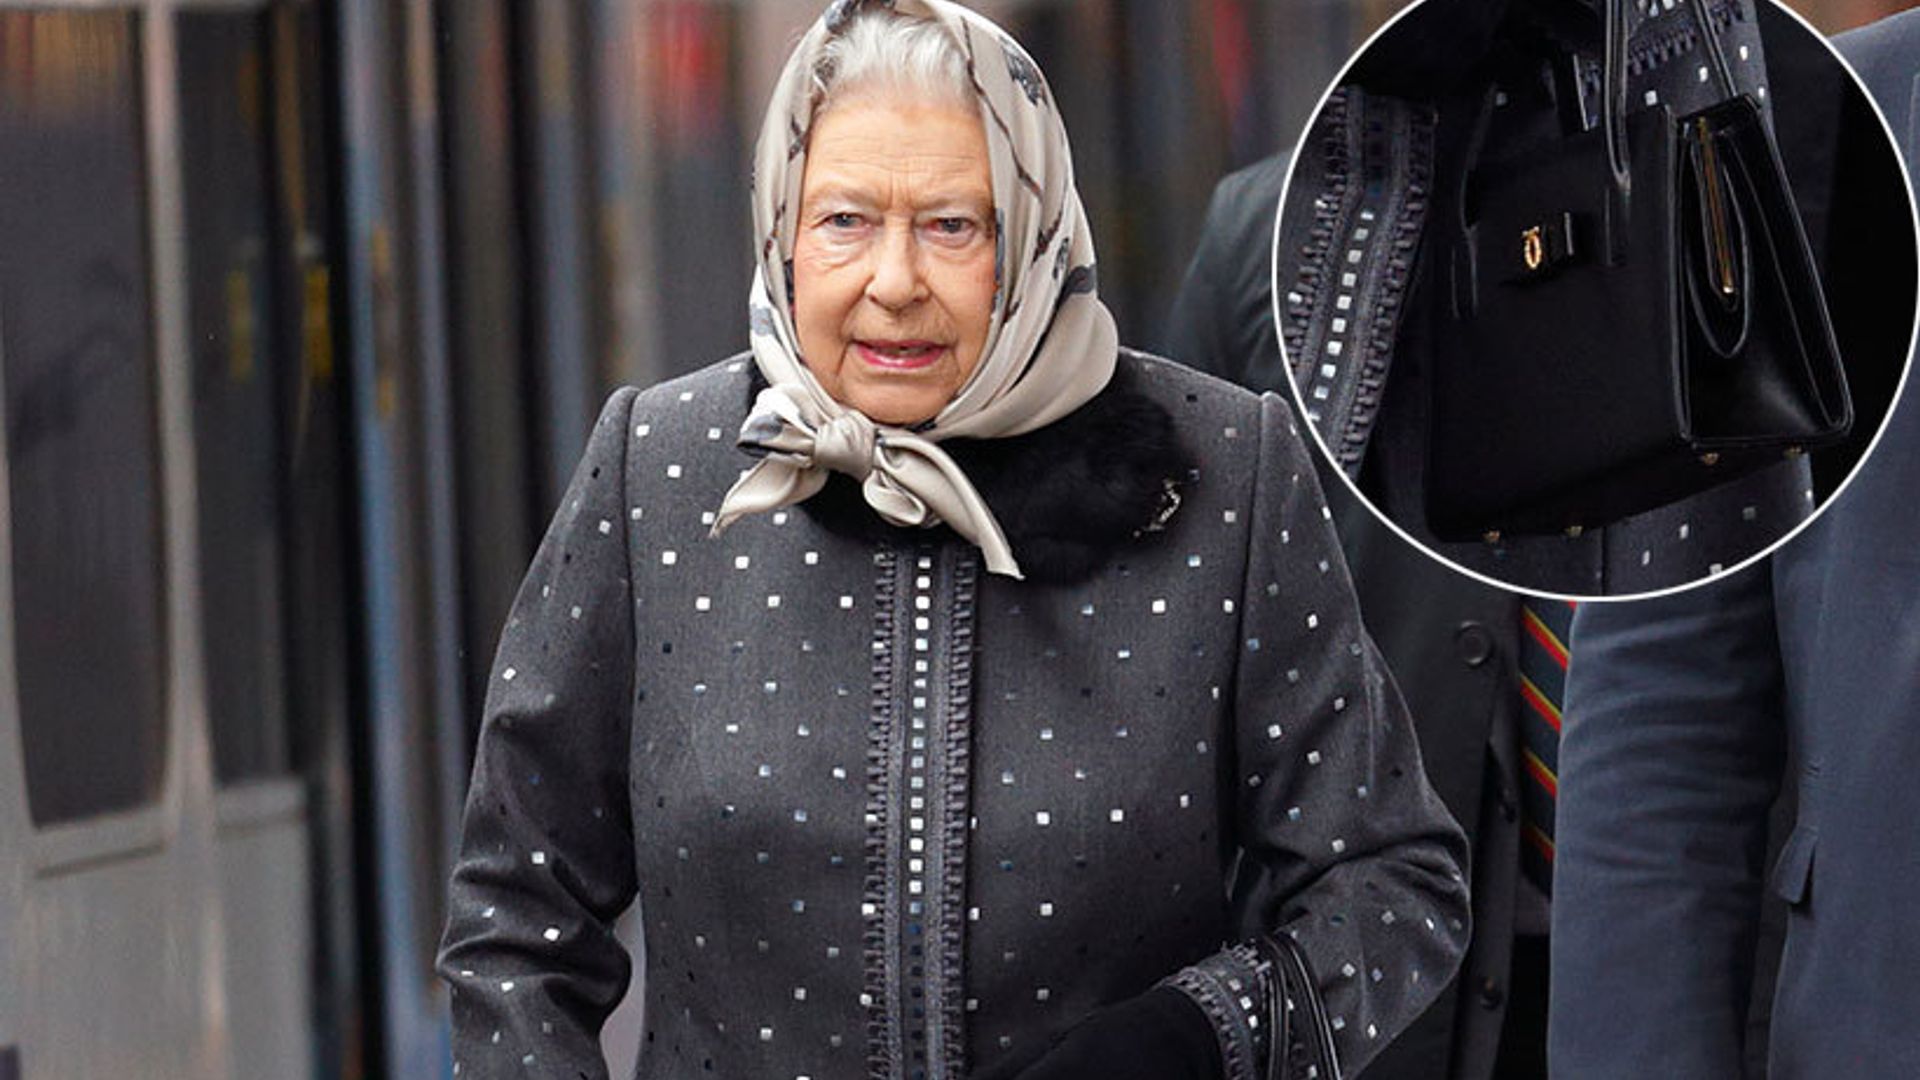 Queen Elizabeth makes a stylish return from her winter break